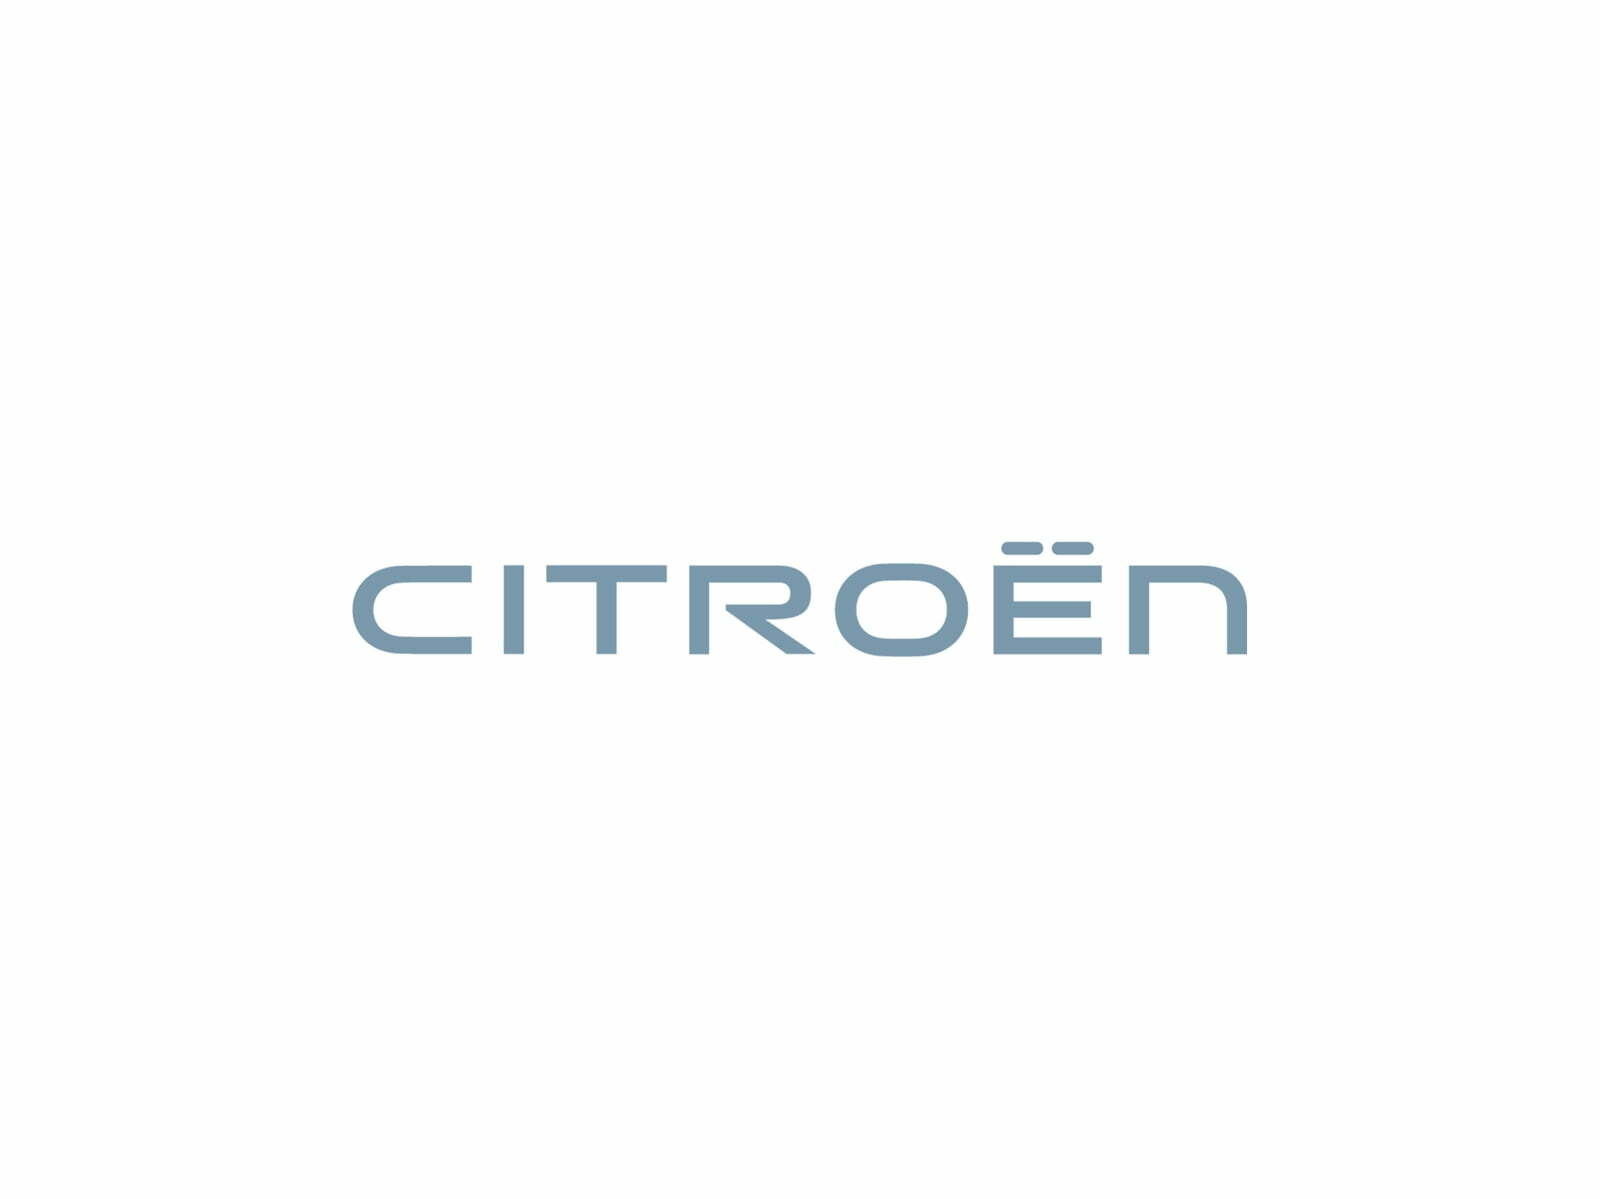 New Citroën Lettering_Blue